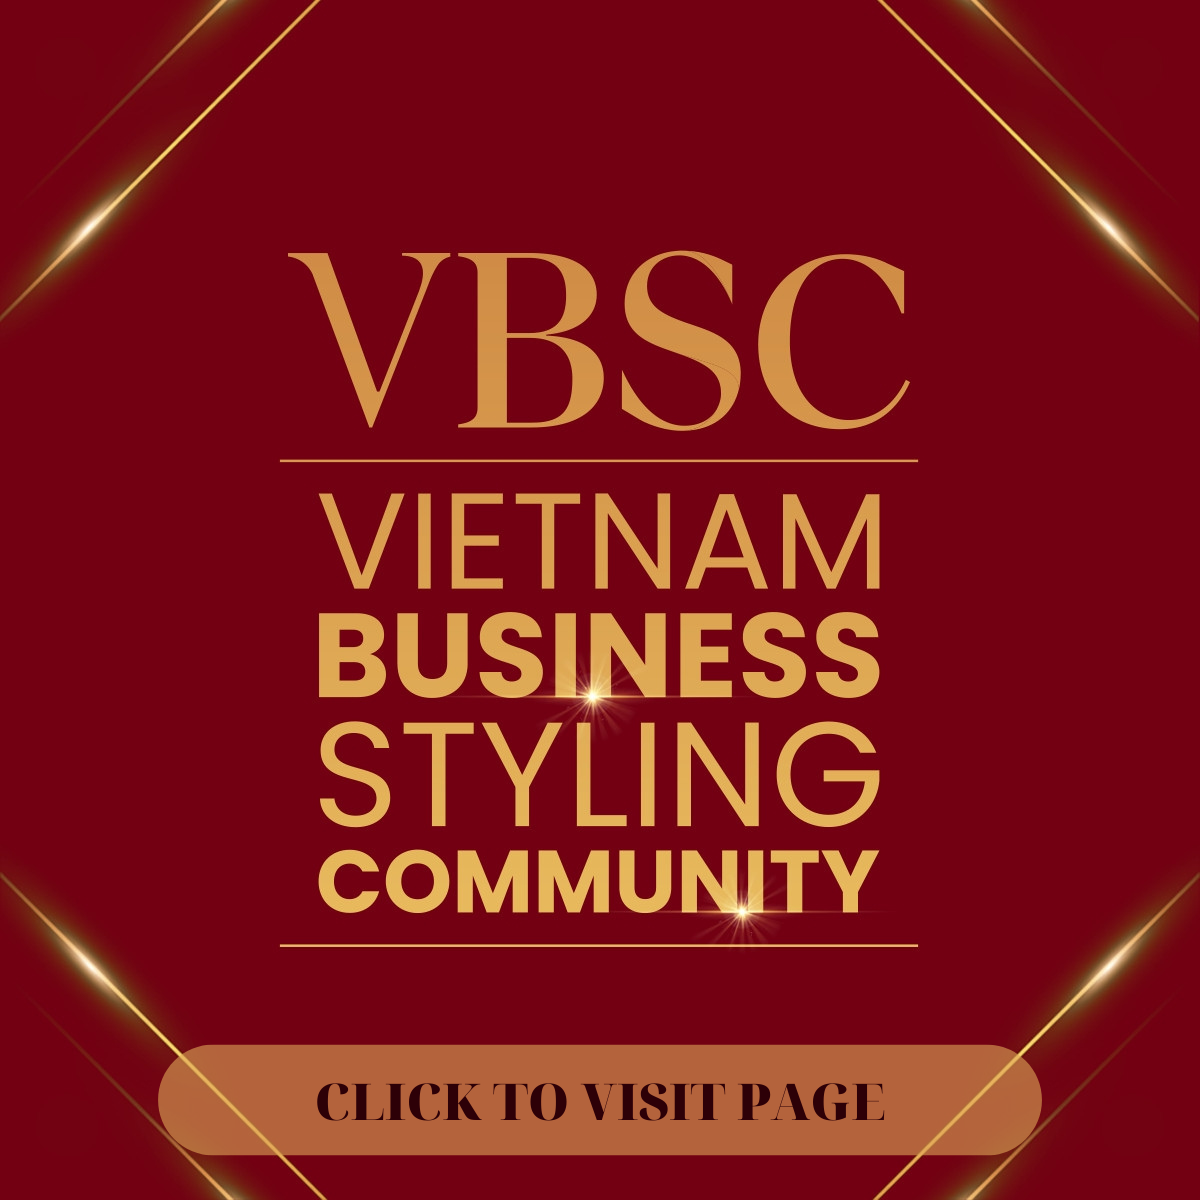 VIETNAM BUSINESS STYLING COMMUNITY